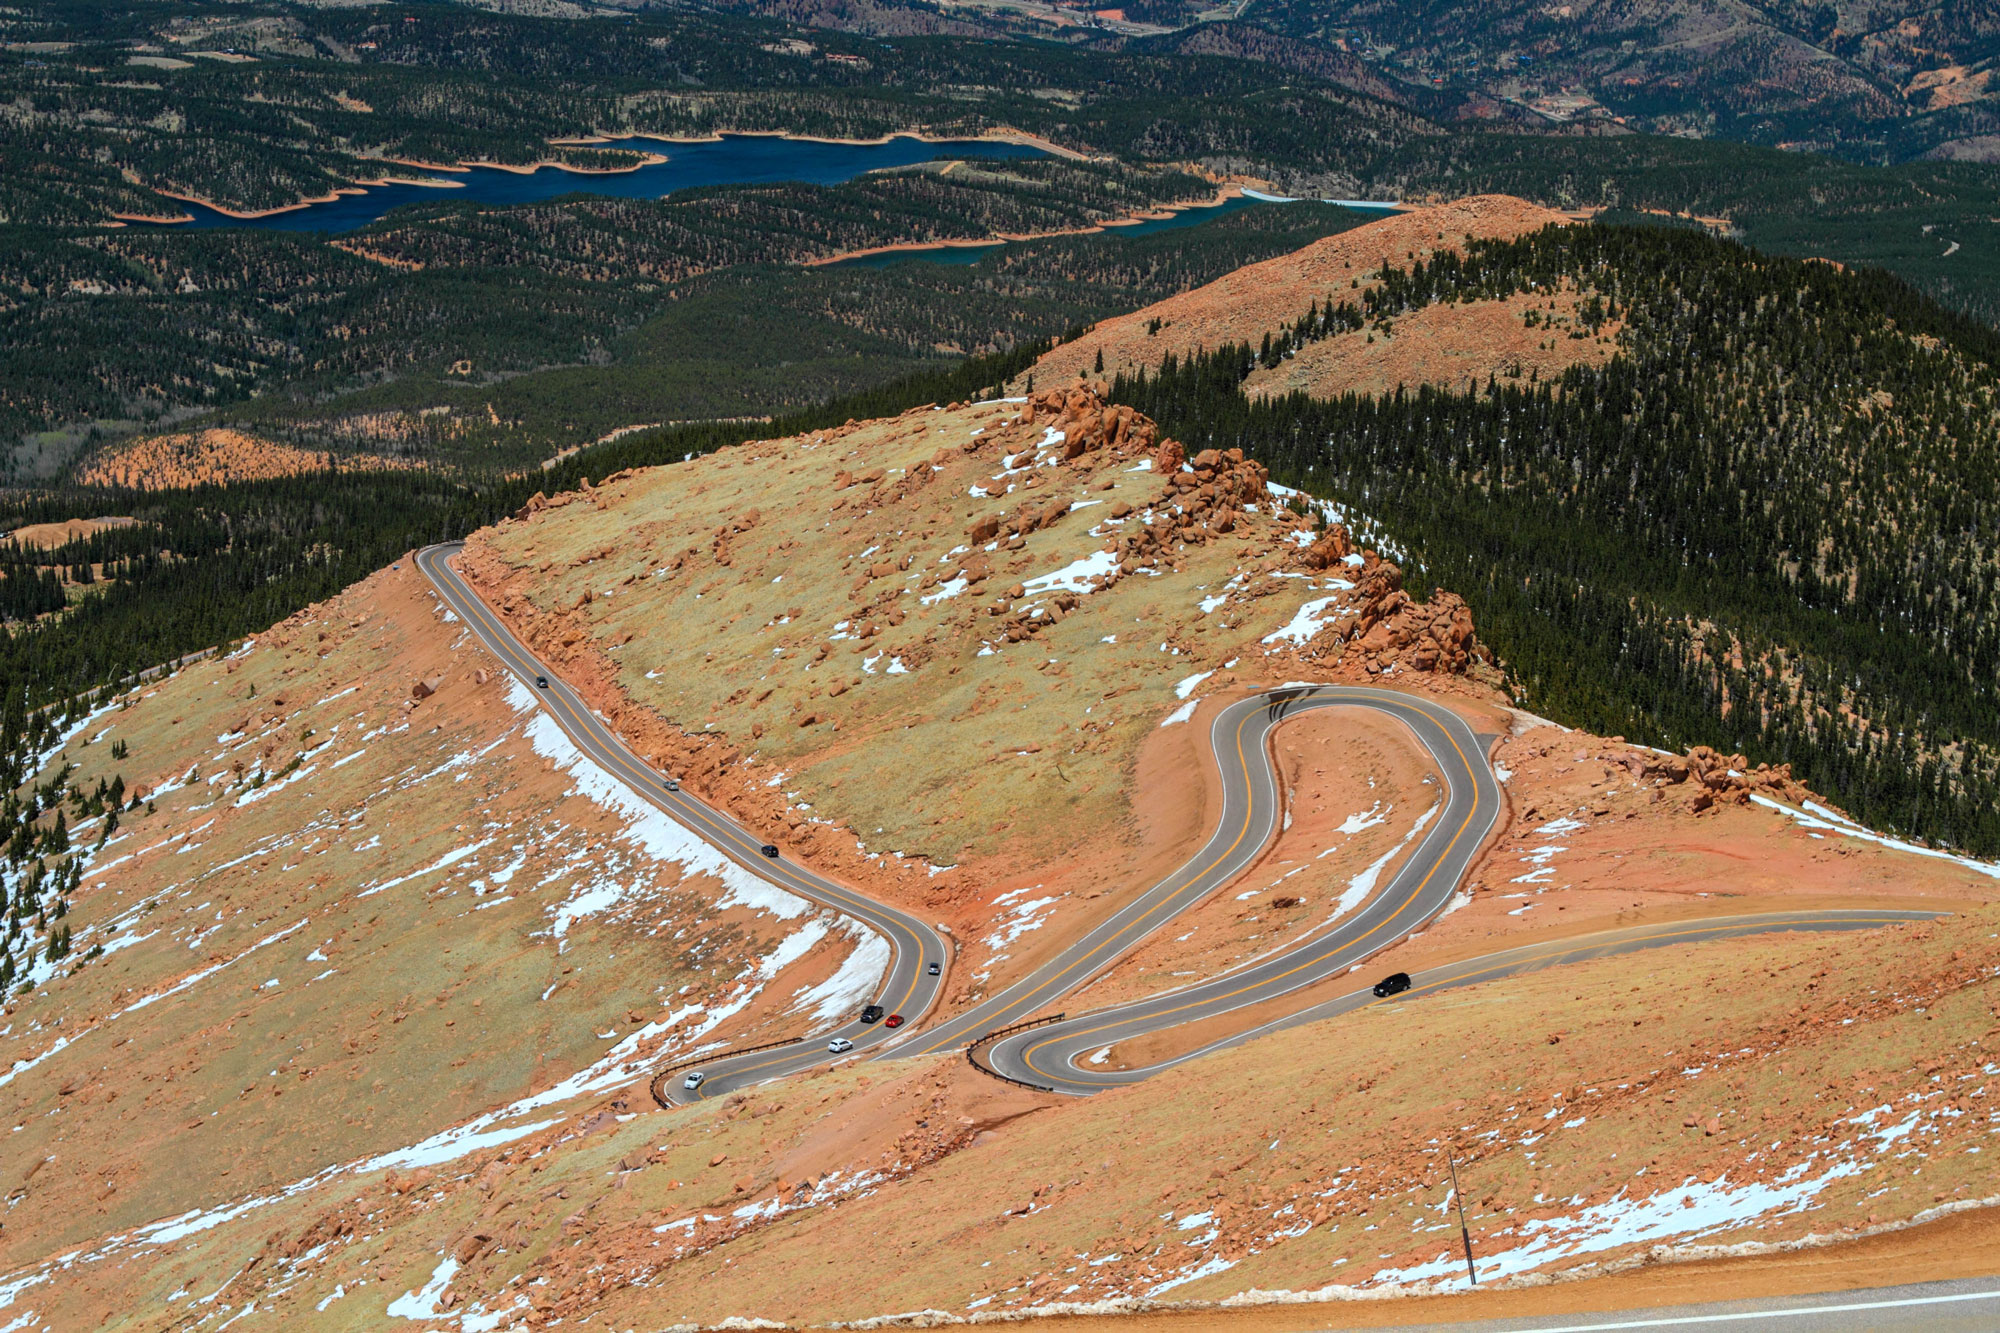 Switchback roads in a mountain landscape